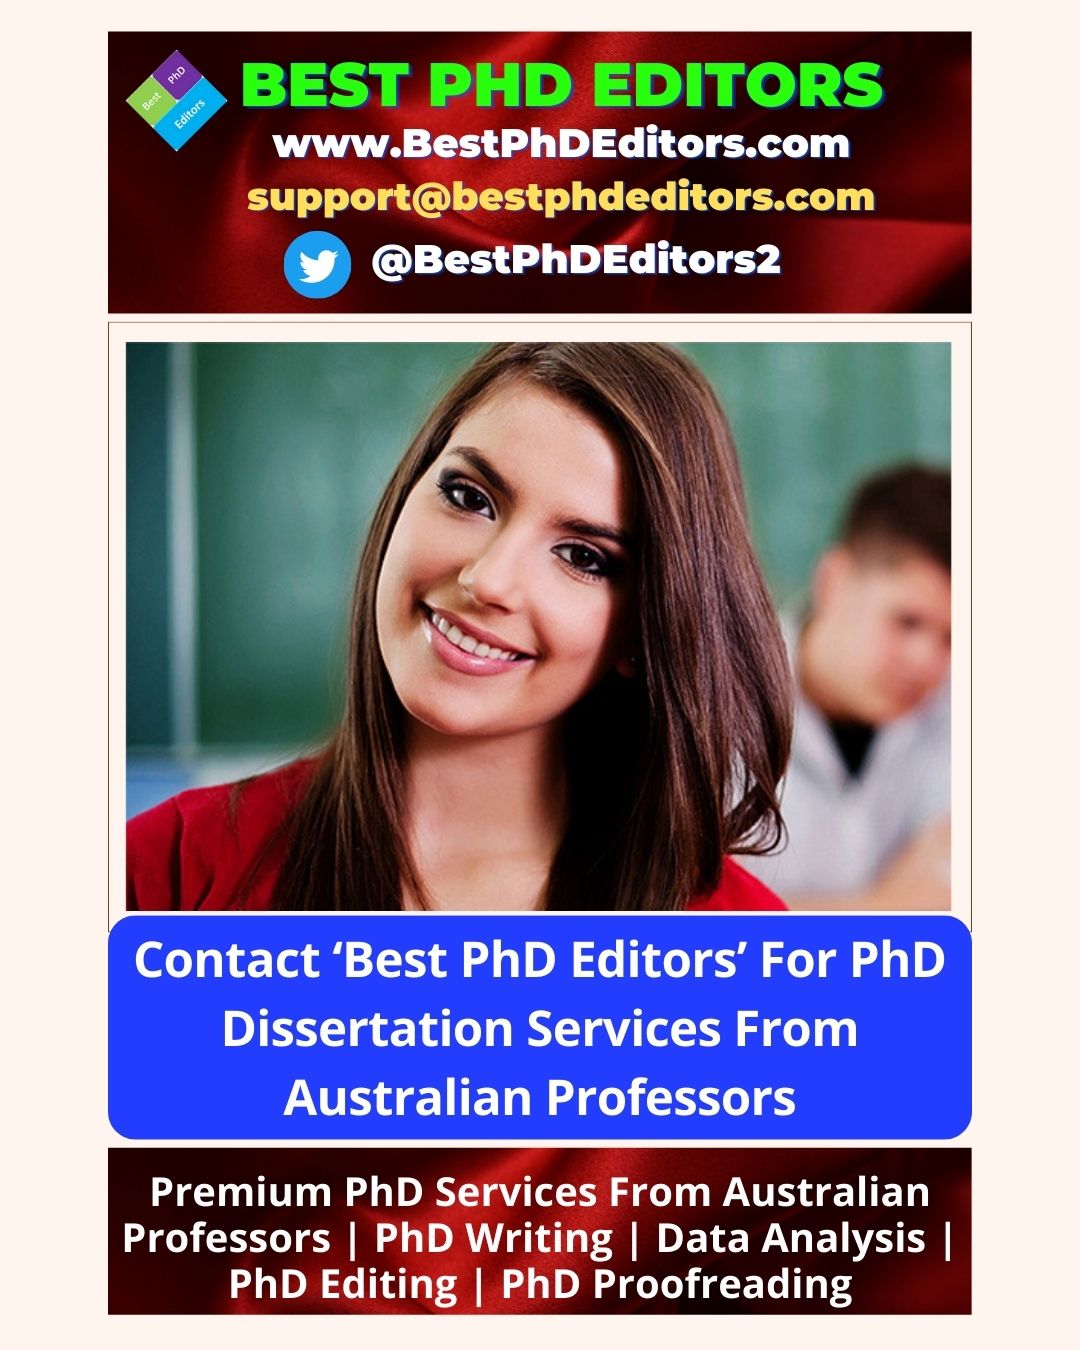 PhD Dissertation Services From Australian Professors